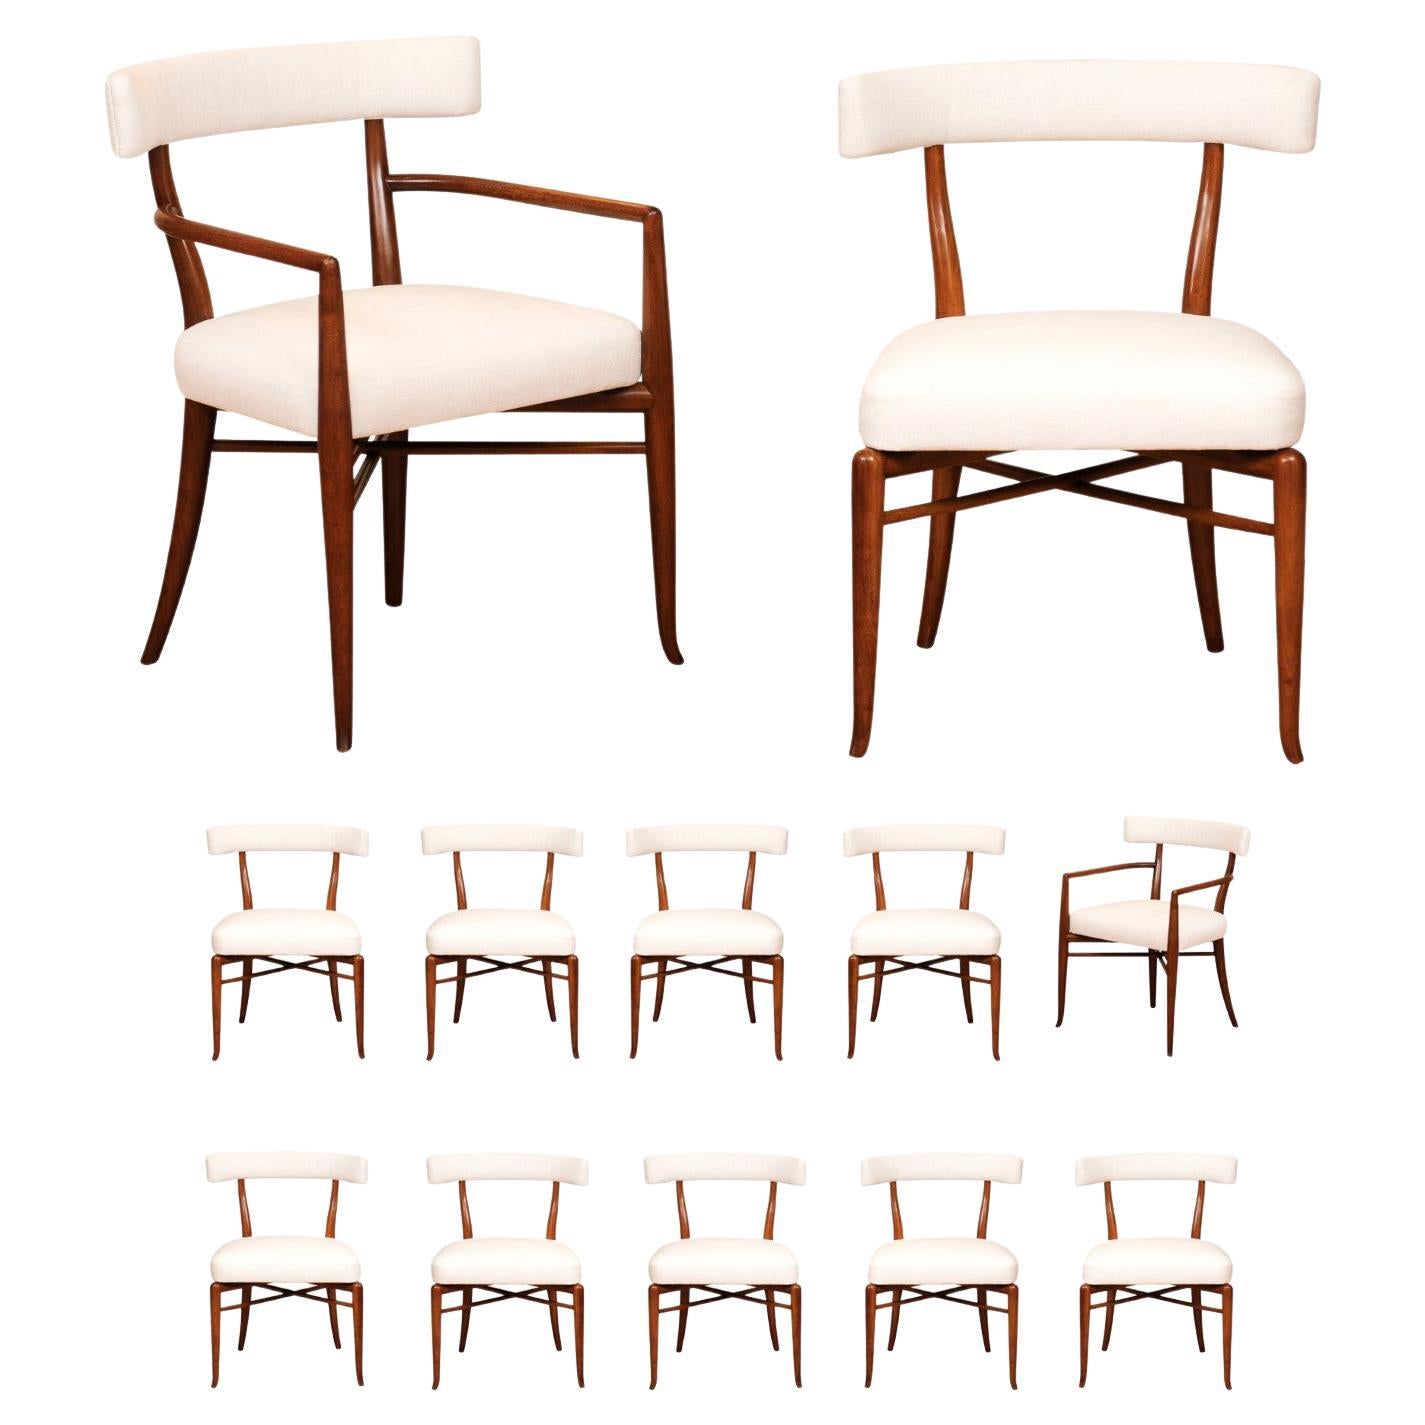 Extraordinary Set of 12 Modern Klismos Chairs by Robsjohn-Gibbings, circa 1950 For Sale